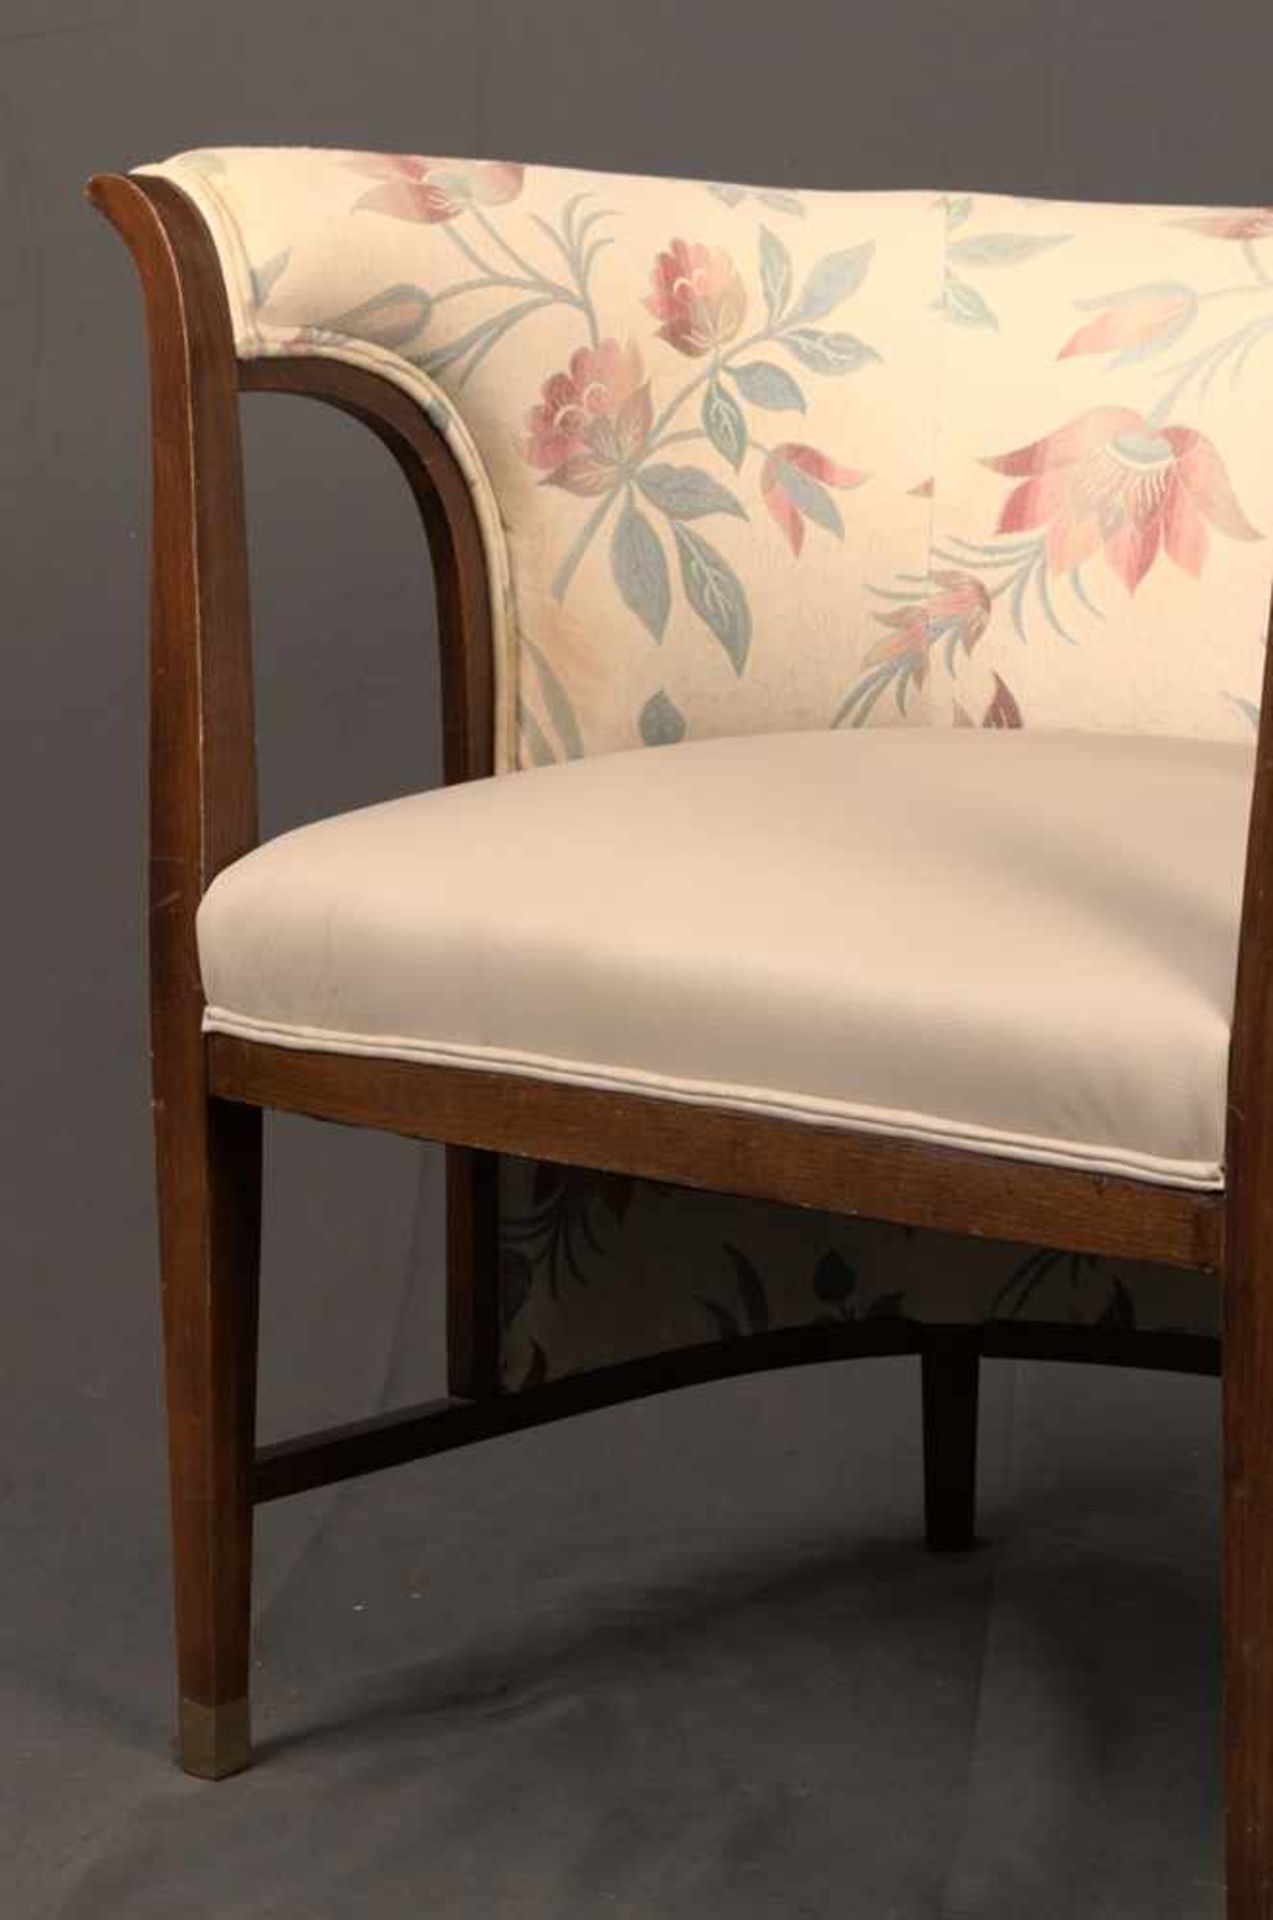 Wiener Polstersessel, hufeisenförmiges, gepolstertes Sesselgestell mit geraden, knatigen Beinen (die - Image 3 of 19